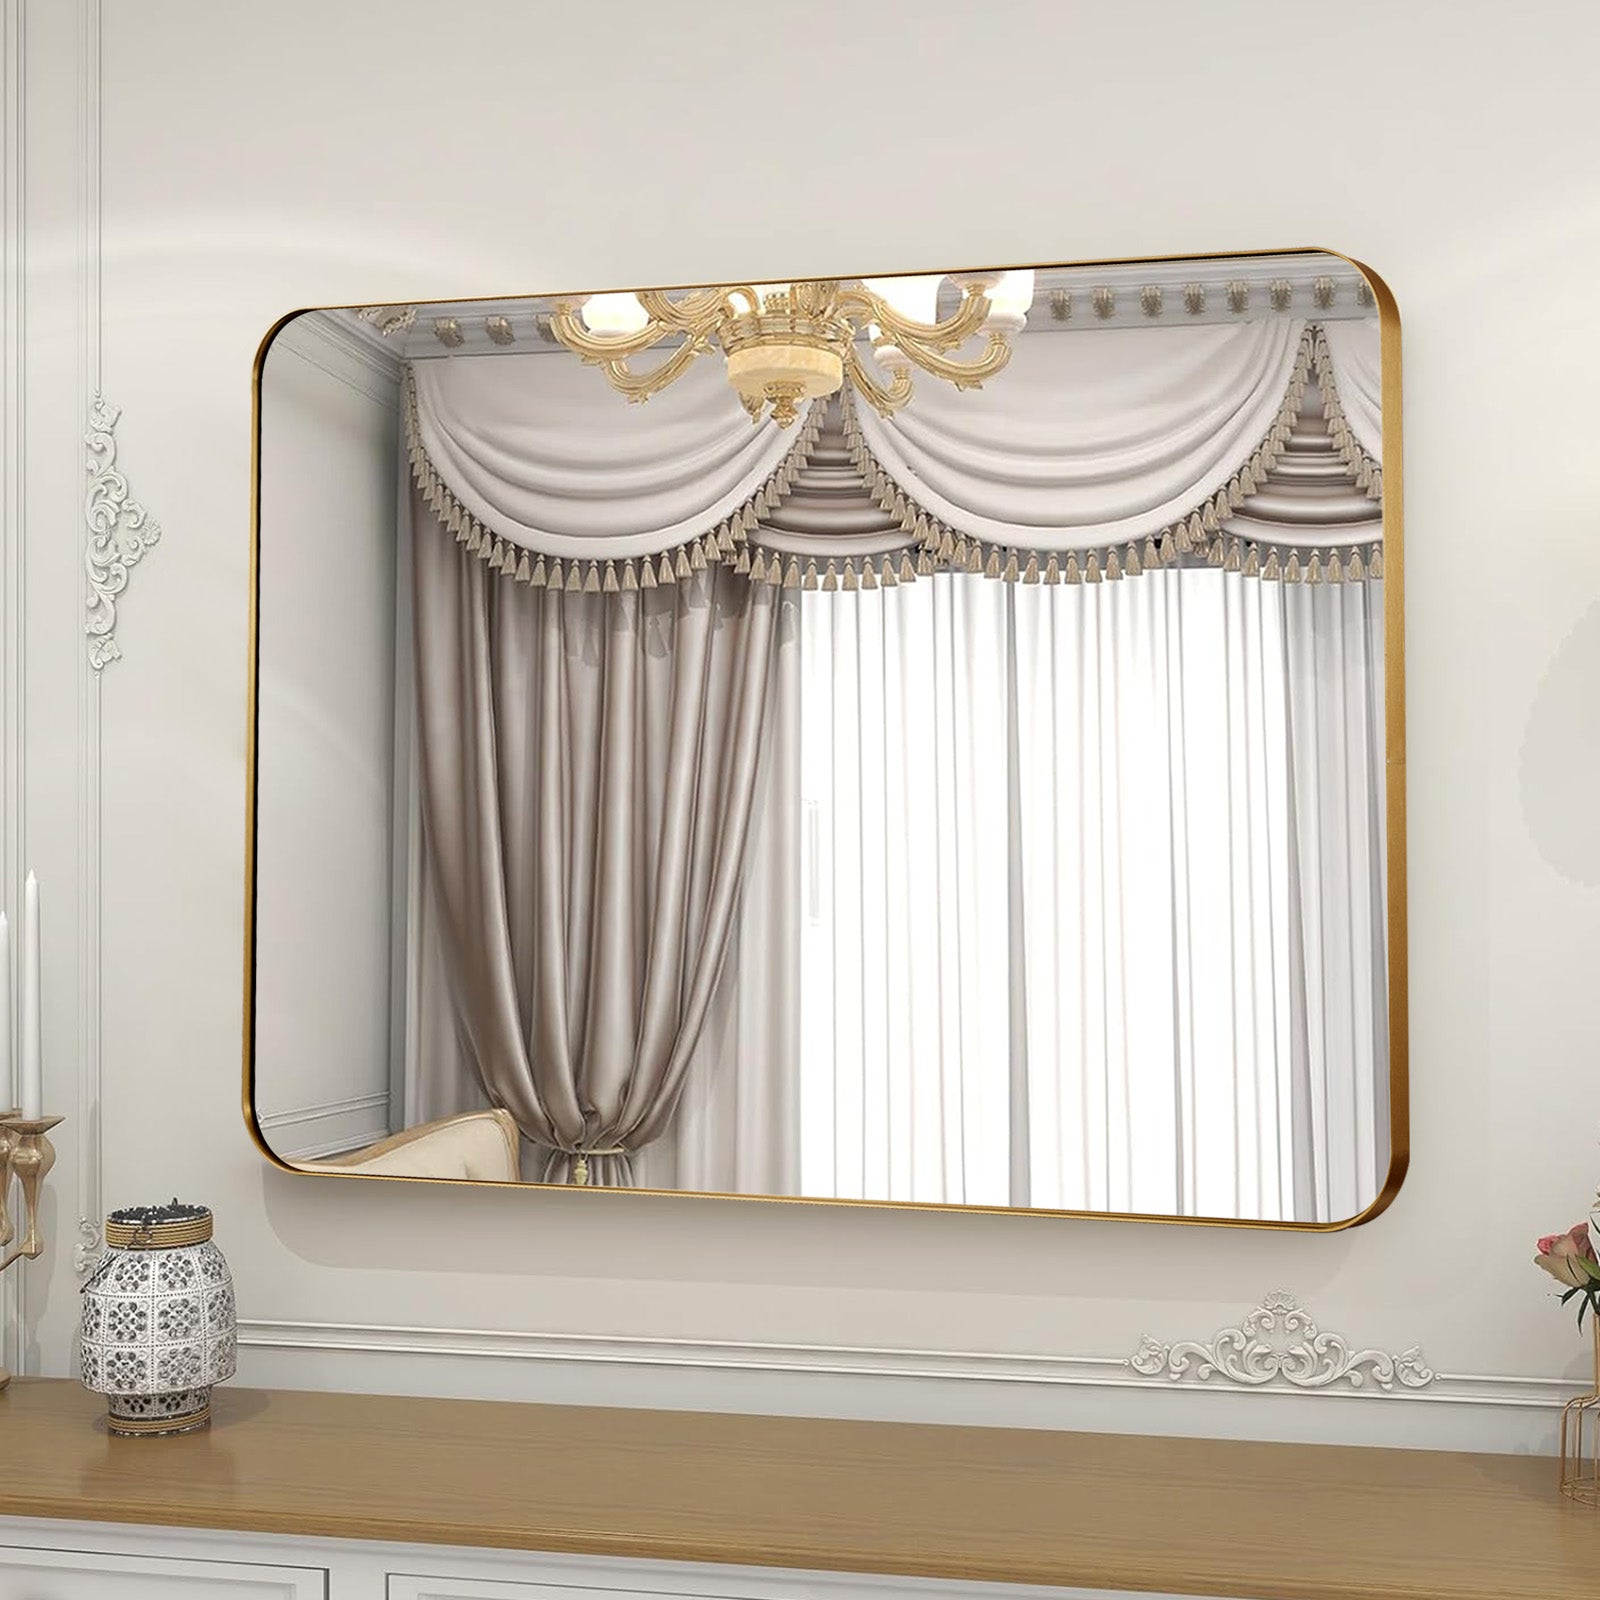 Luxury Rounded Rectangular Bathroom Mirrors with Aluminum Framed